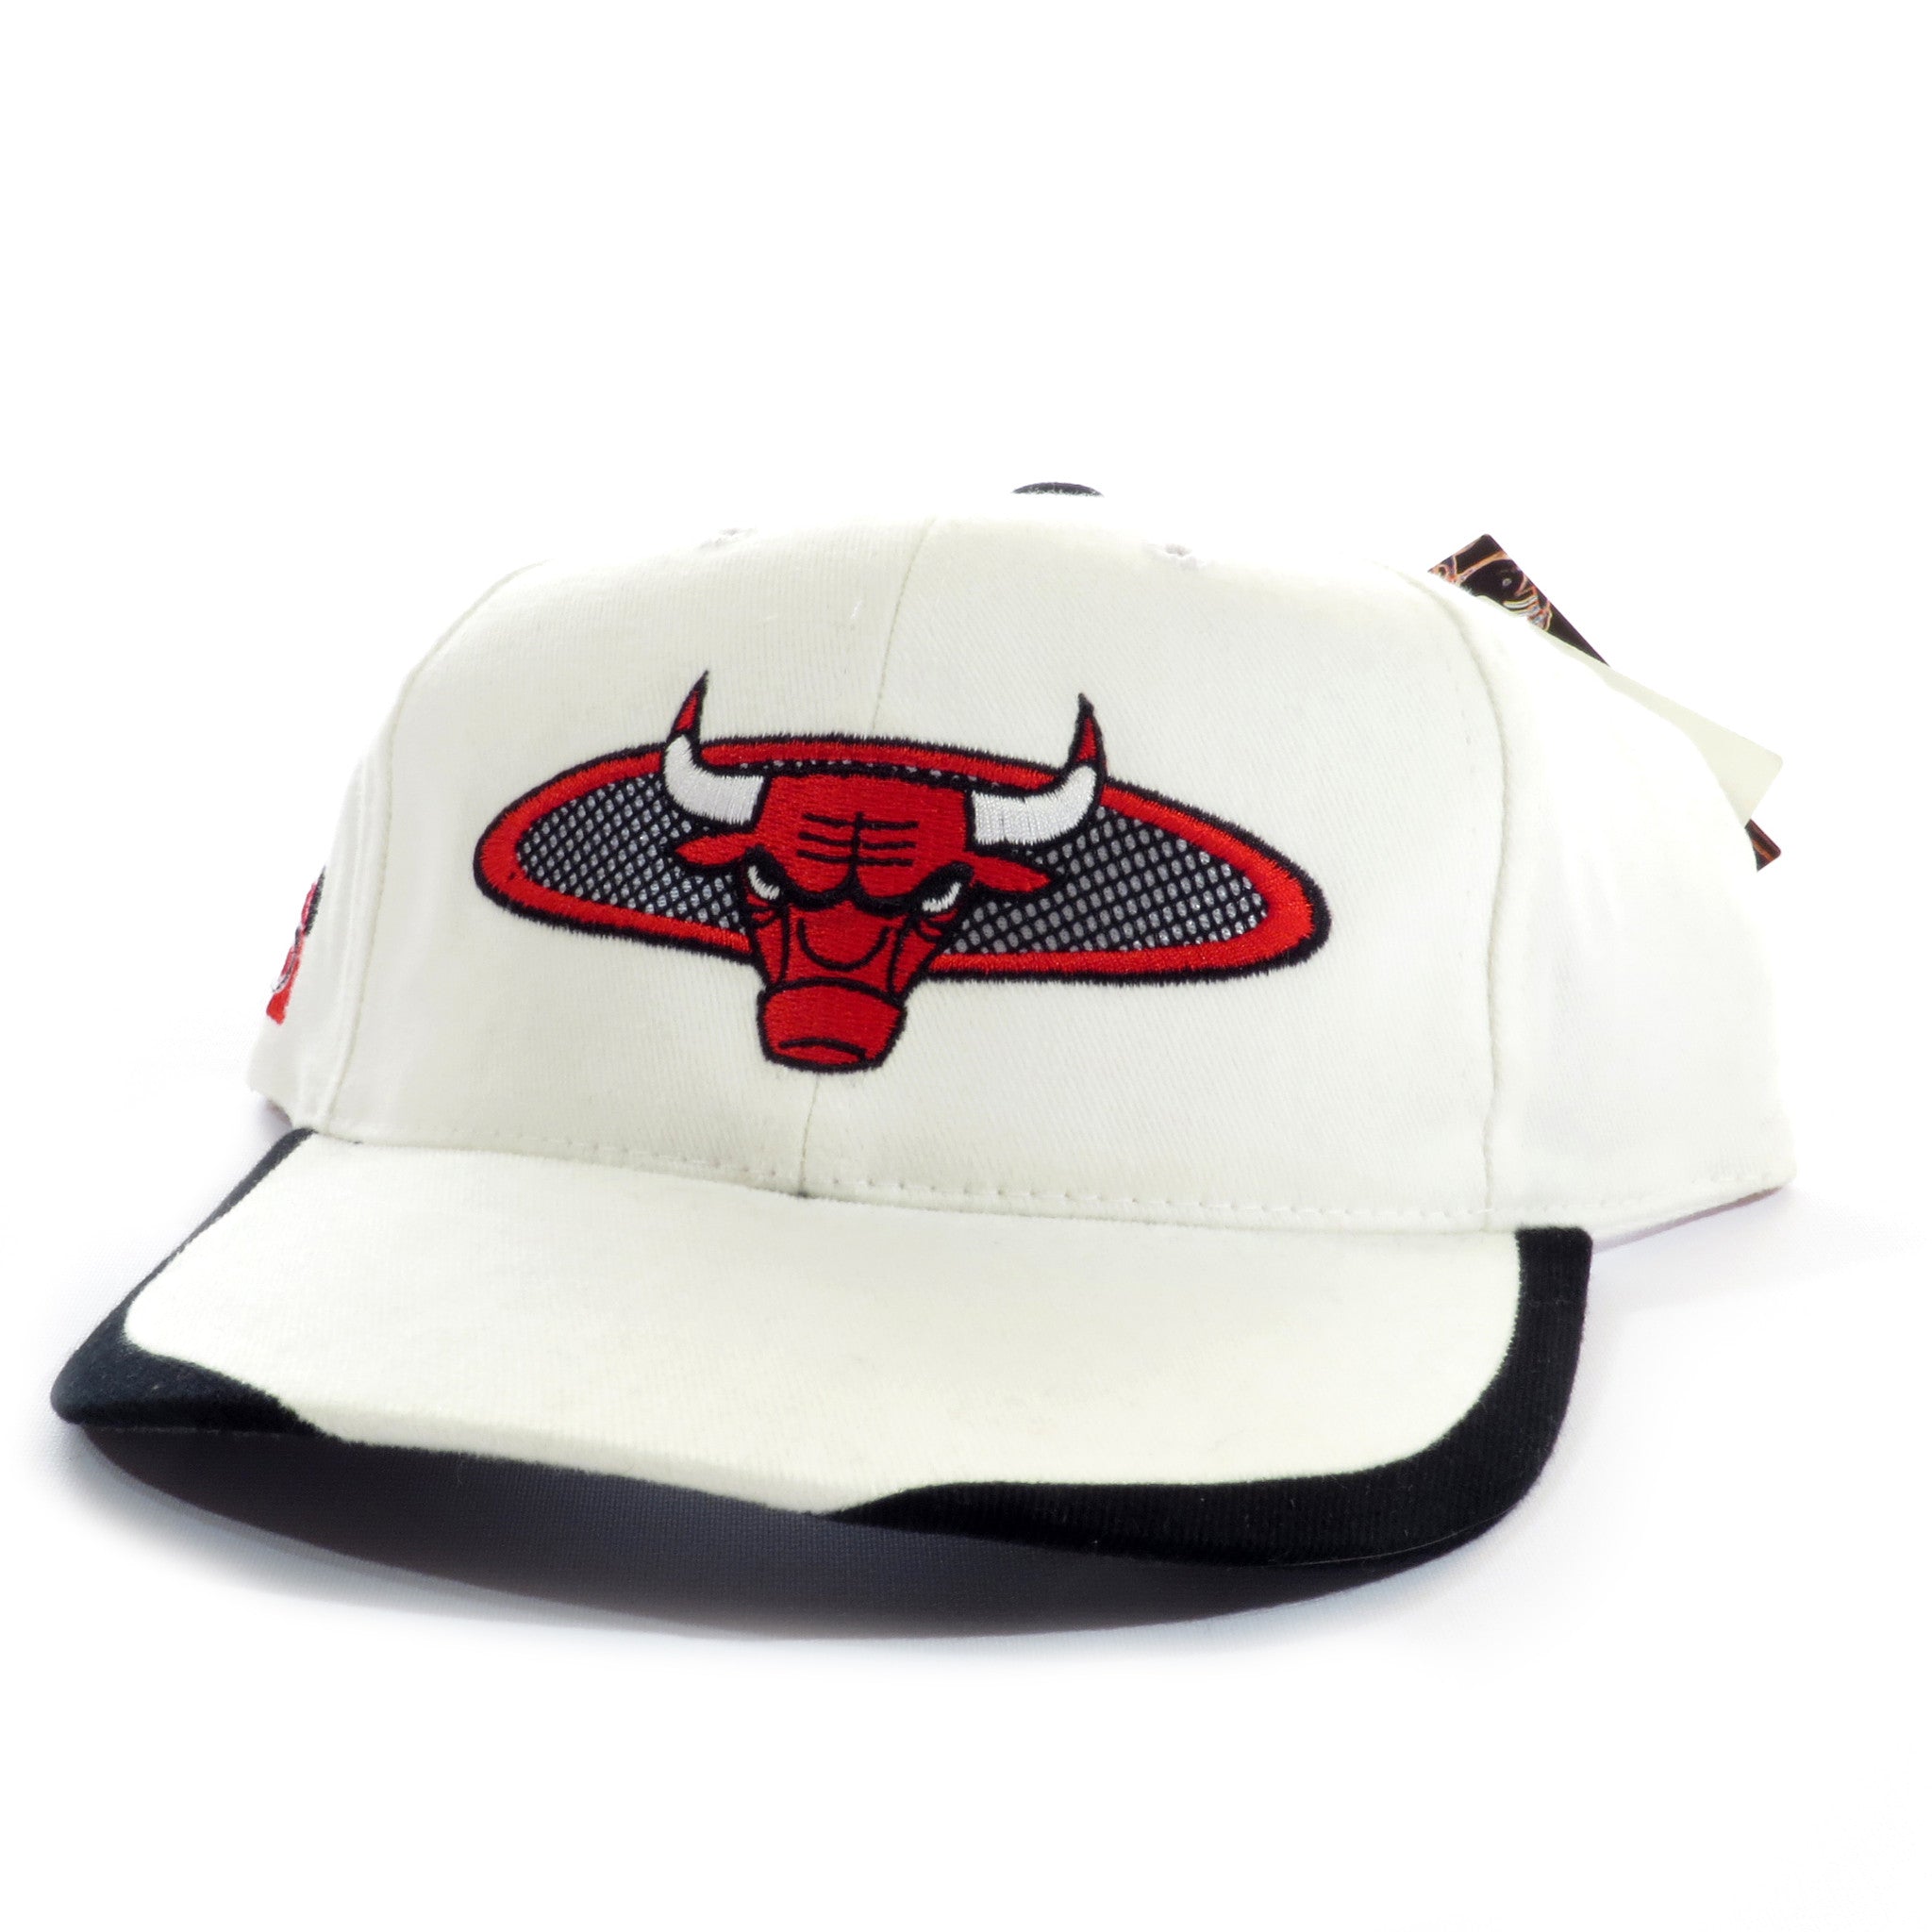 Chicago Bulls Sports Specialties Snapback Hat